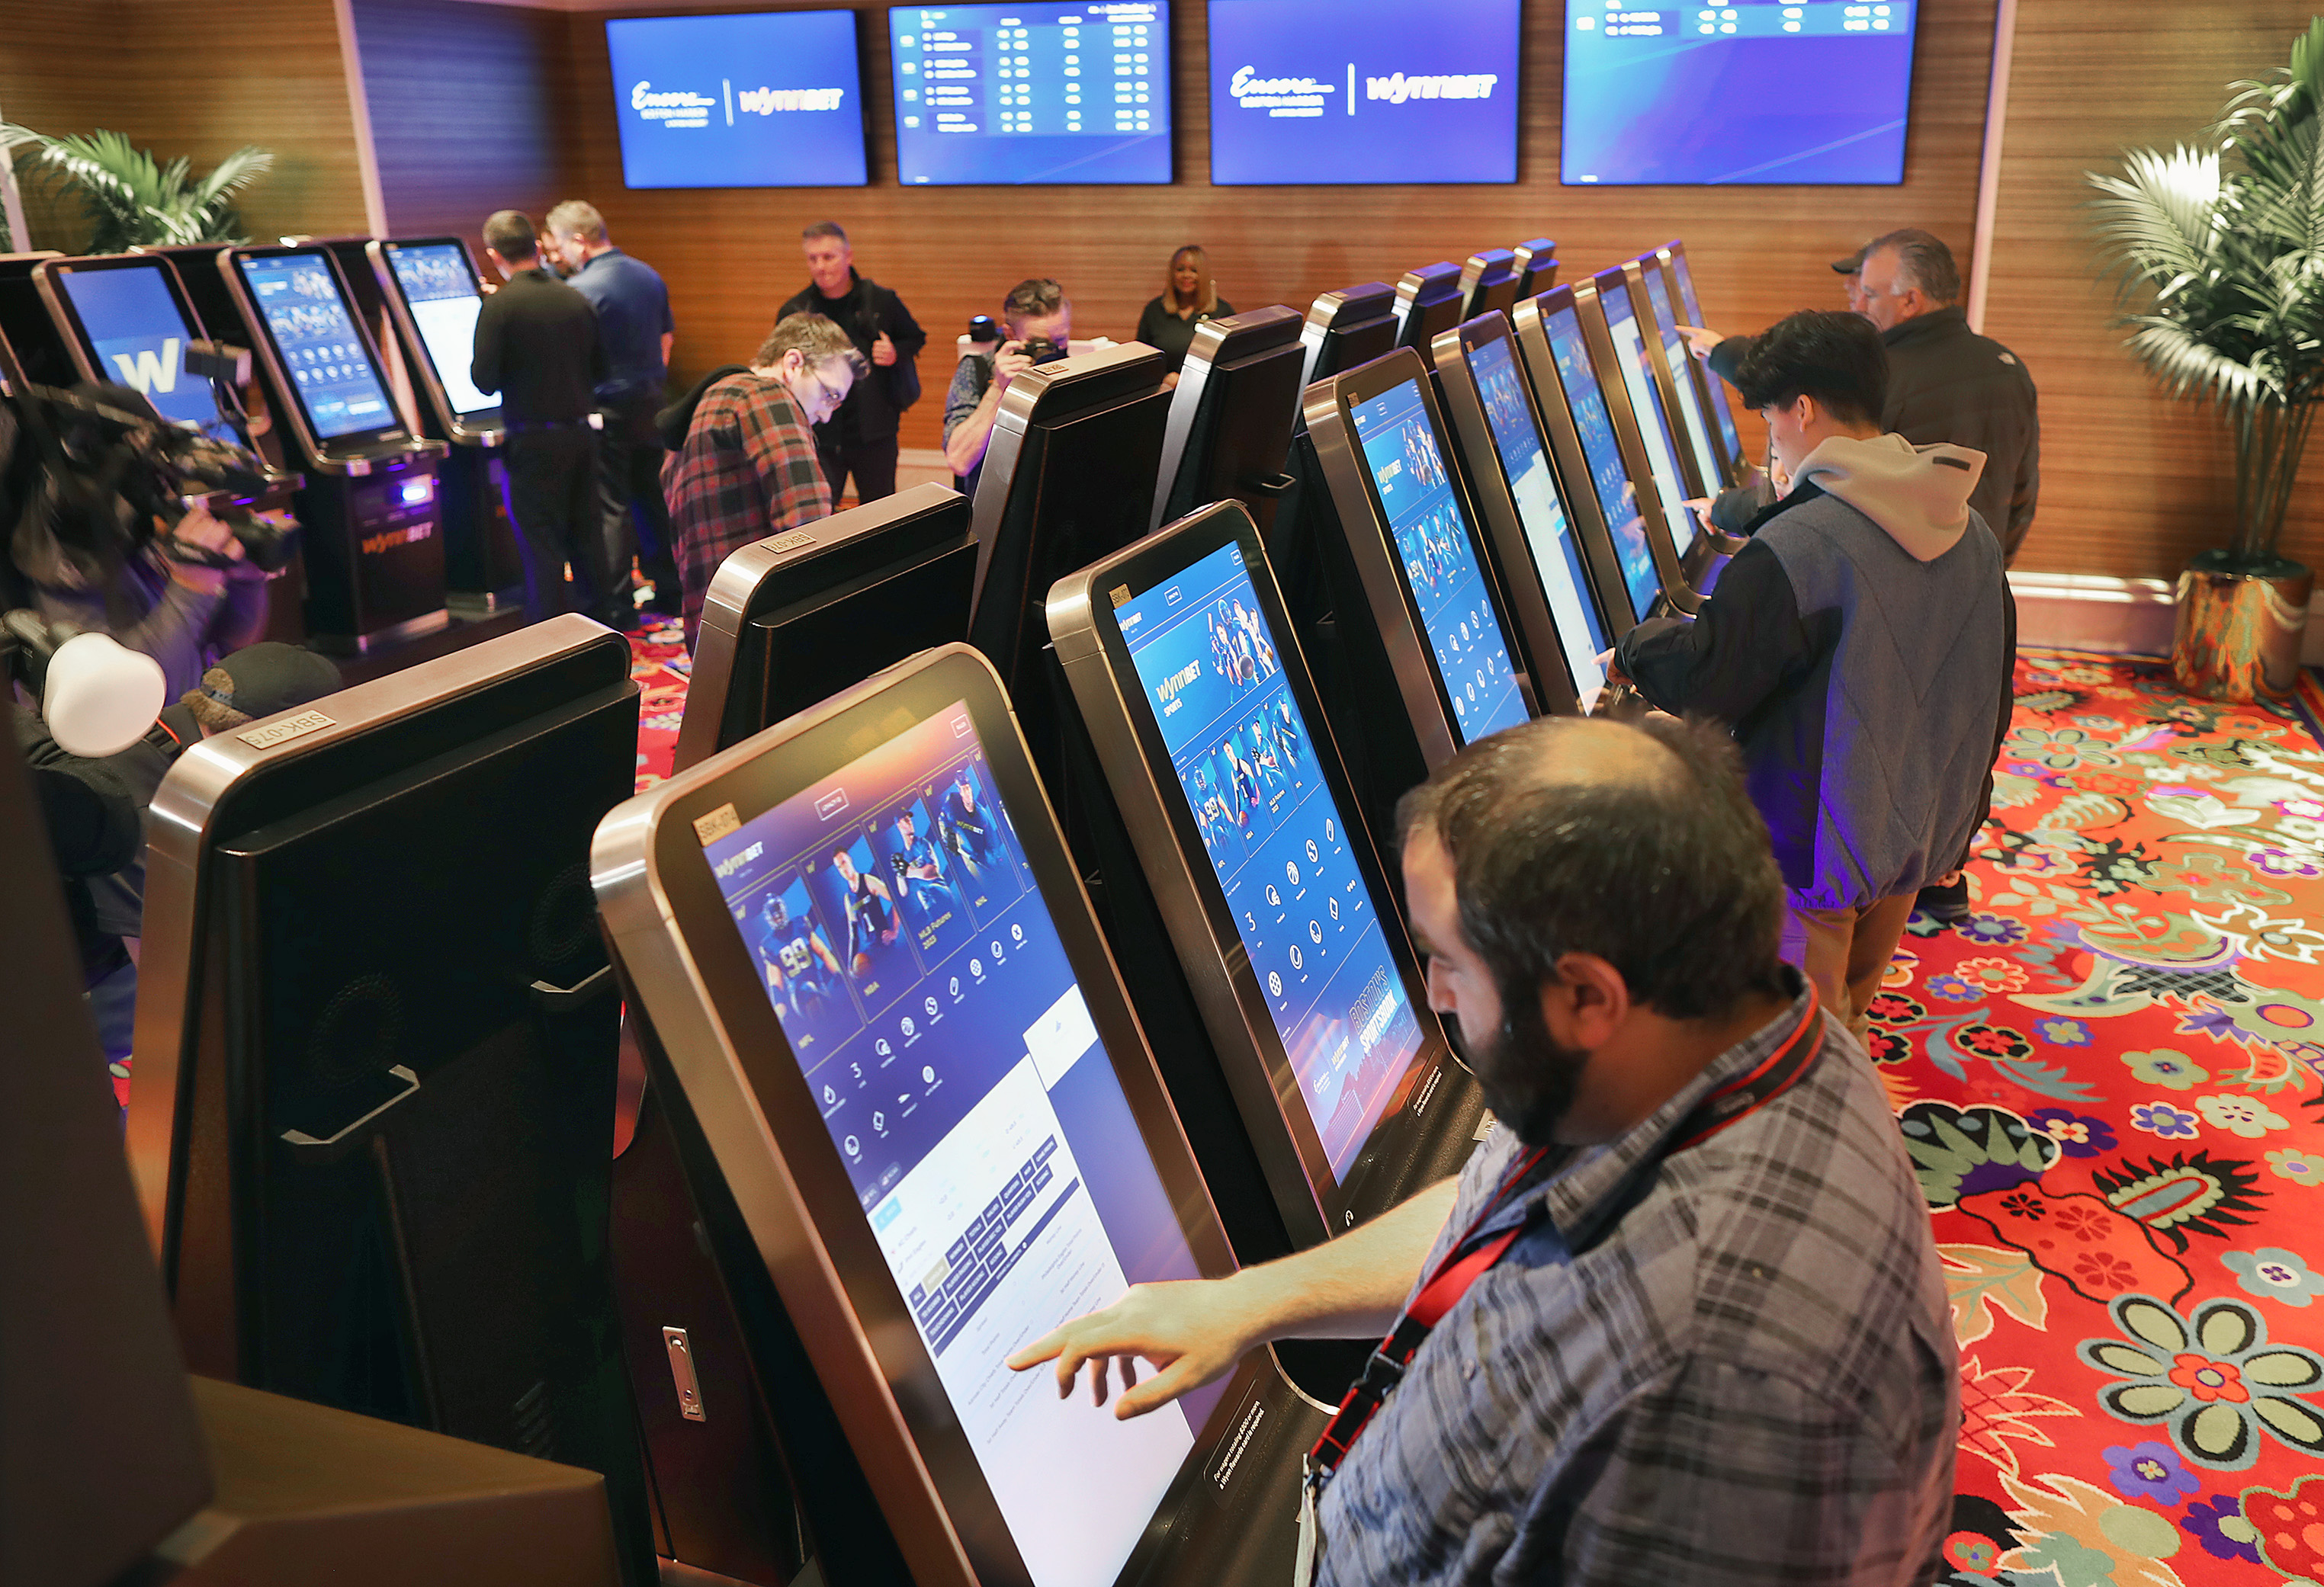 3 Las Vegas hotels introduce self-check in kiosks